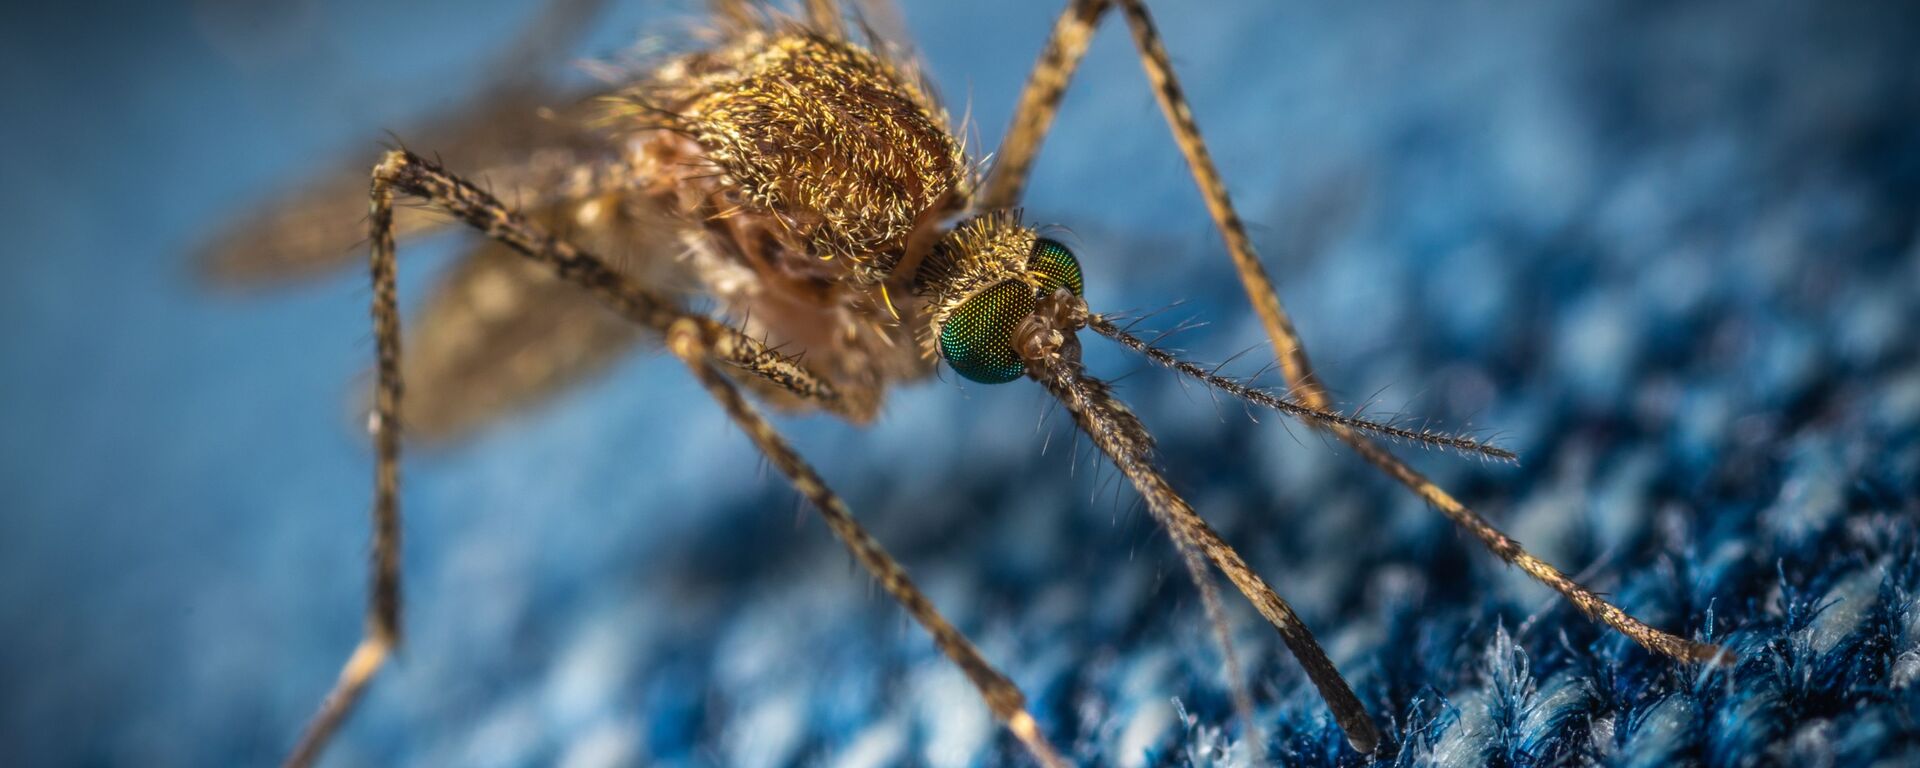 Un mosquito, referencial - Sputnik Mundo, 1920, 18.07.2021